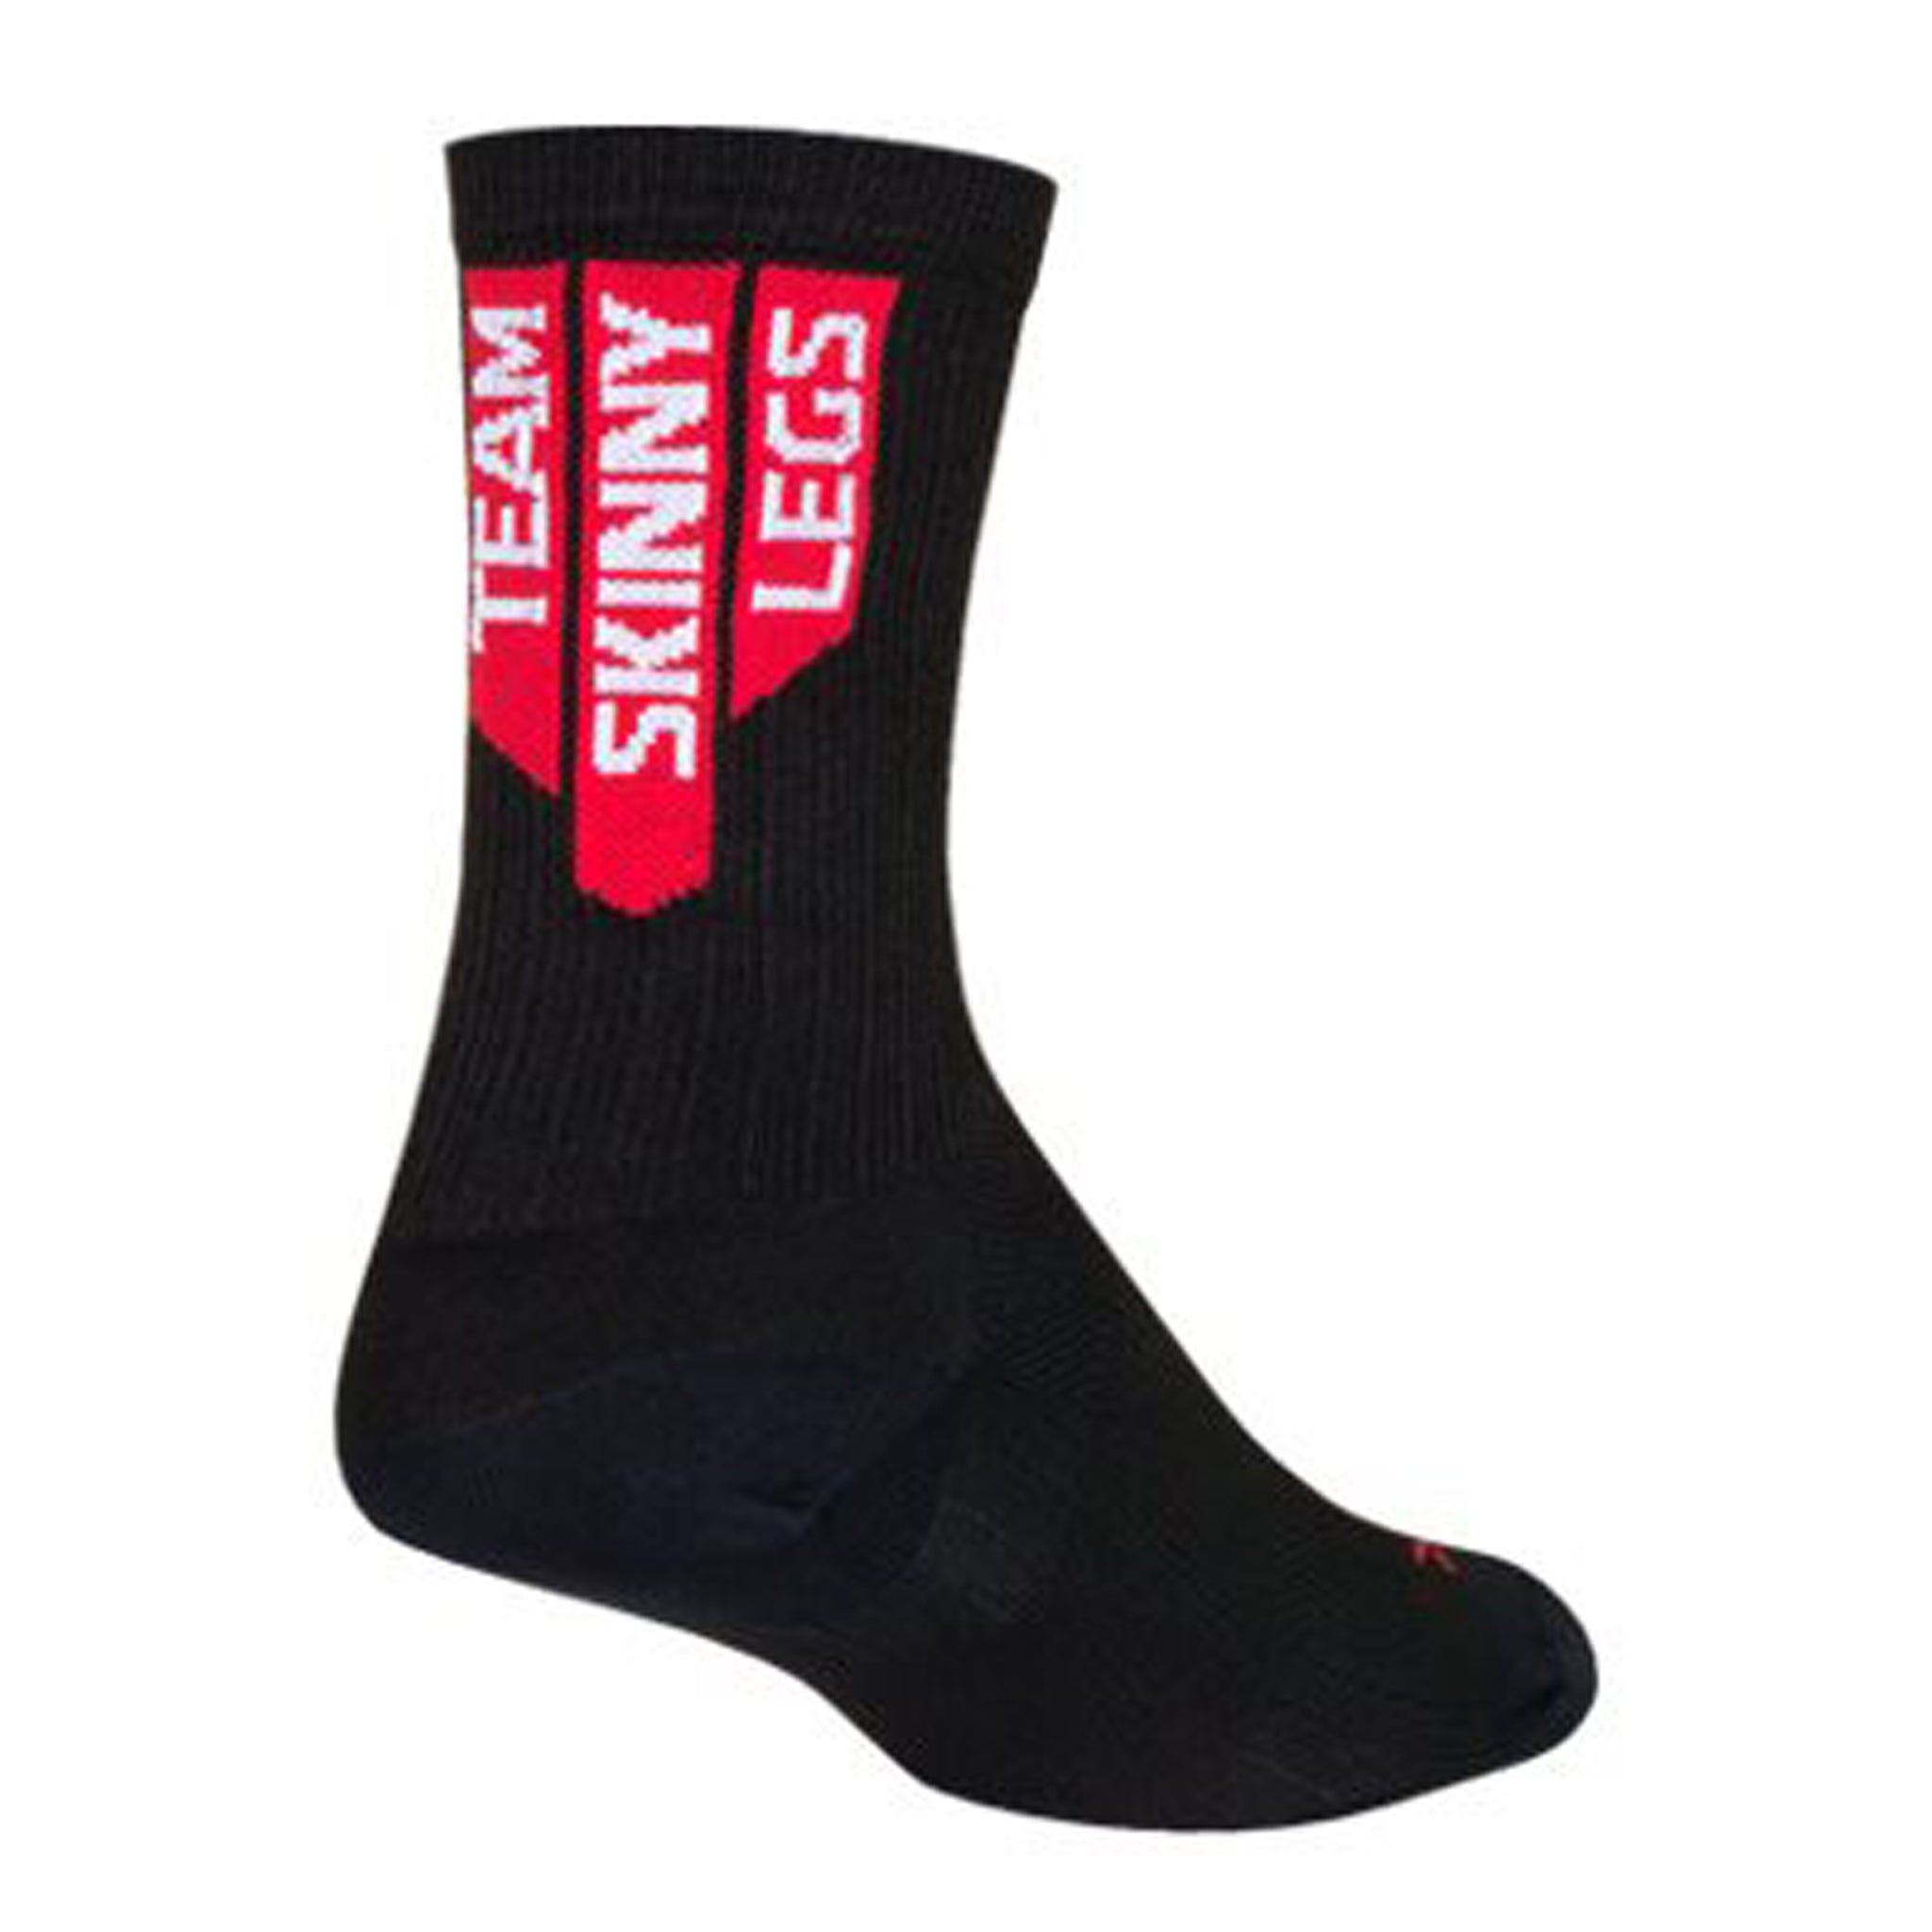 Sockguy Team Skinny Legs SGX6 Socks 9-13 Black